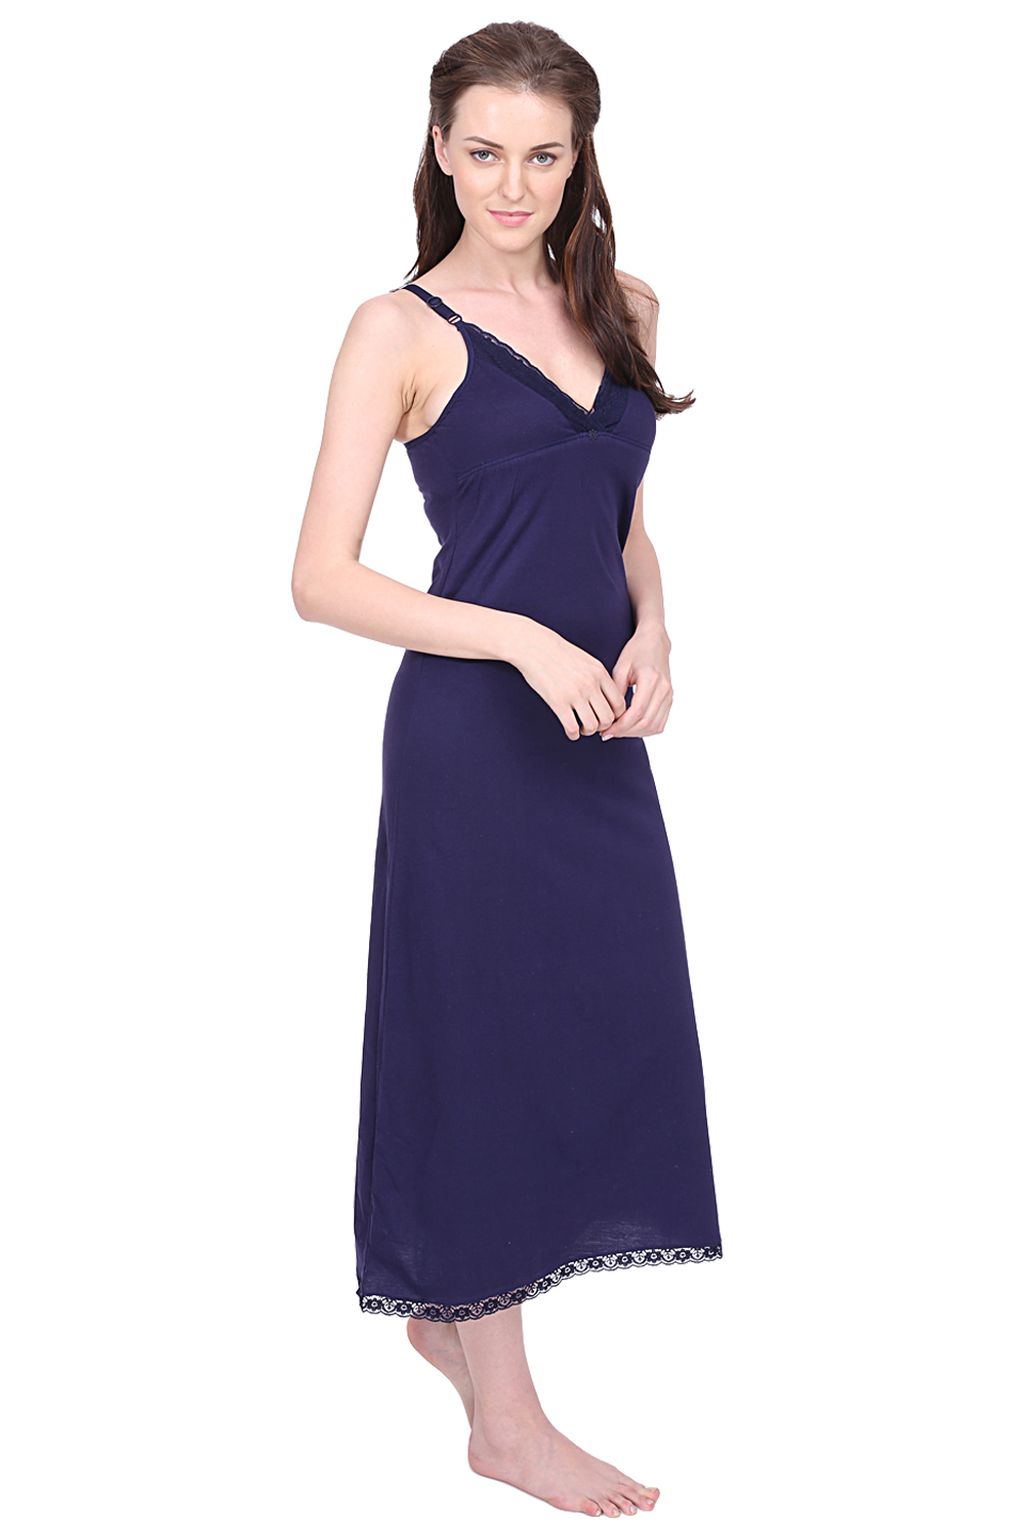 509 INR - Long Camisole Bra Slip for Women - Cotton Nighty Slips